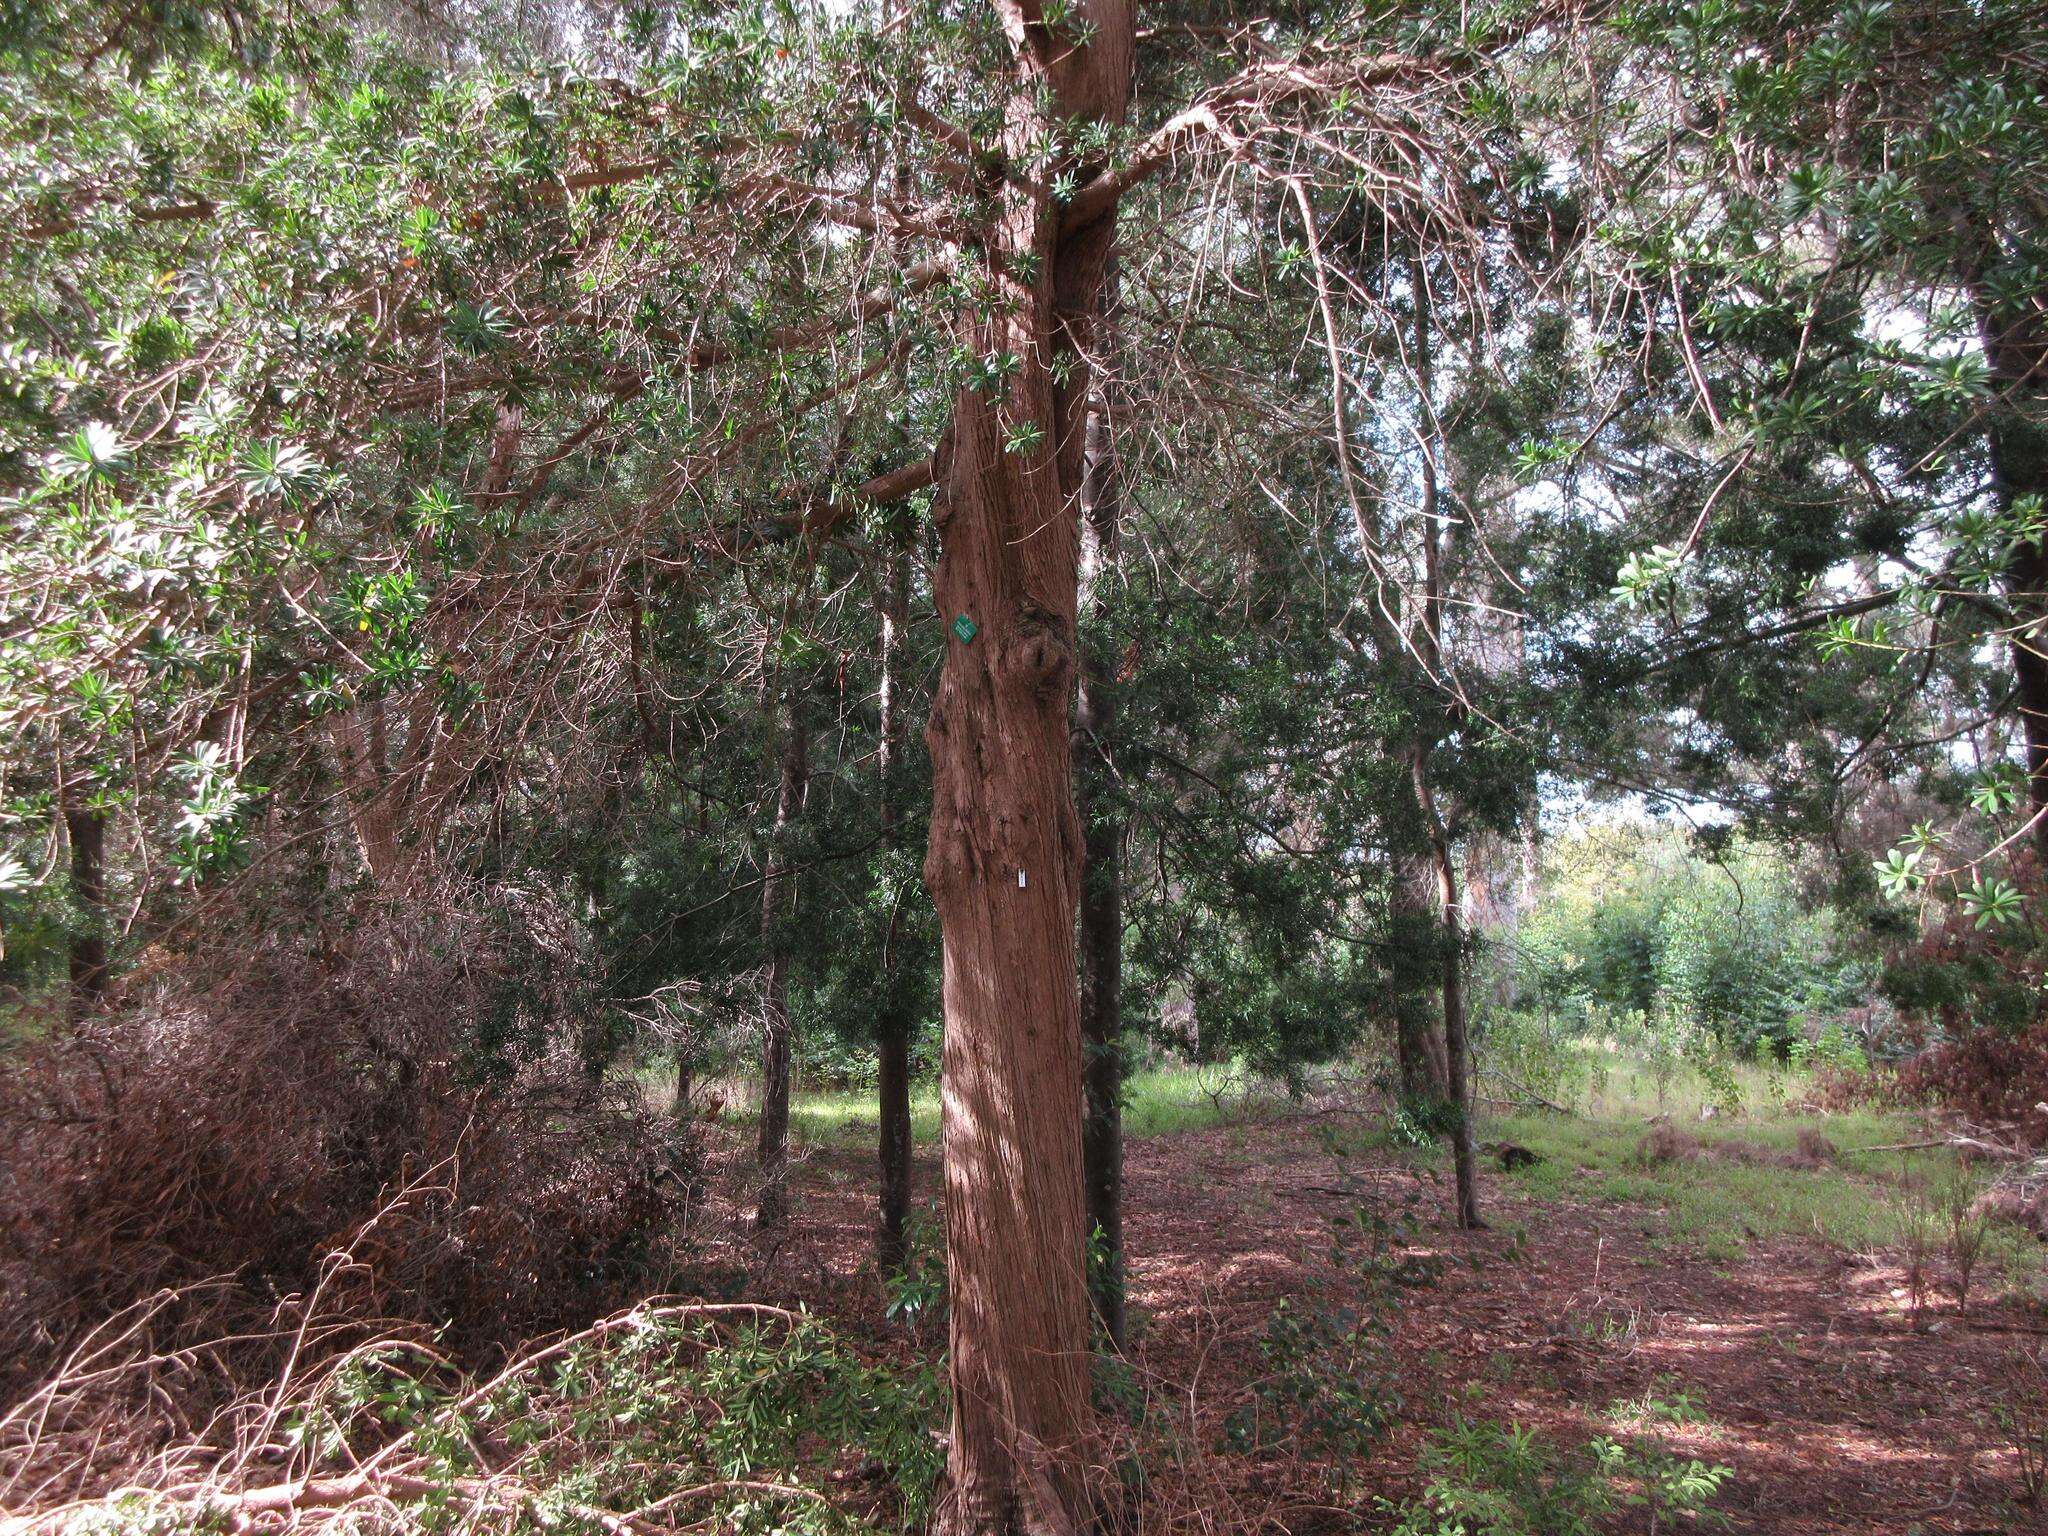 Image of Broad-leaved Yellowwood